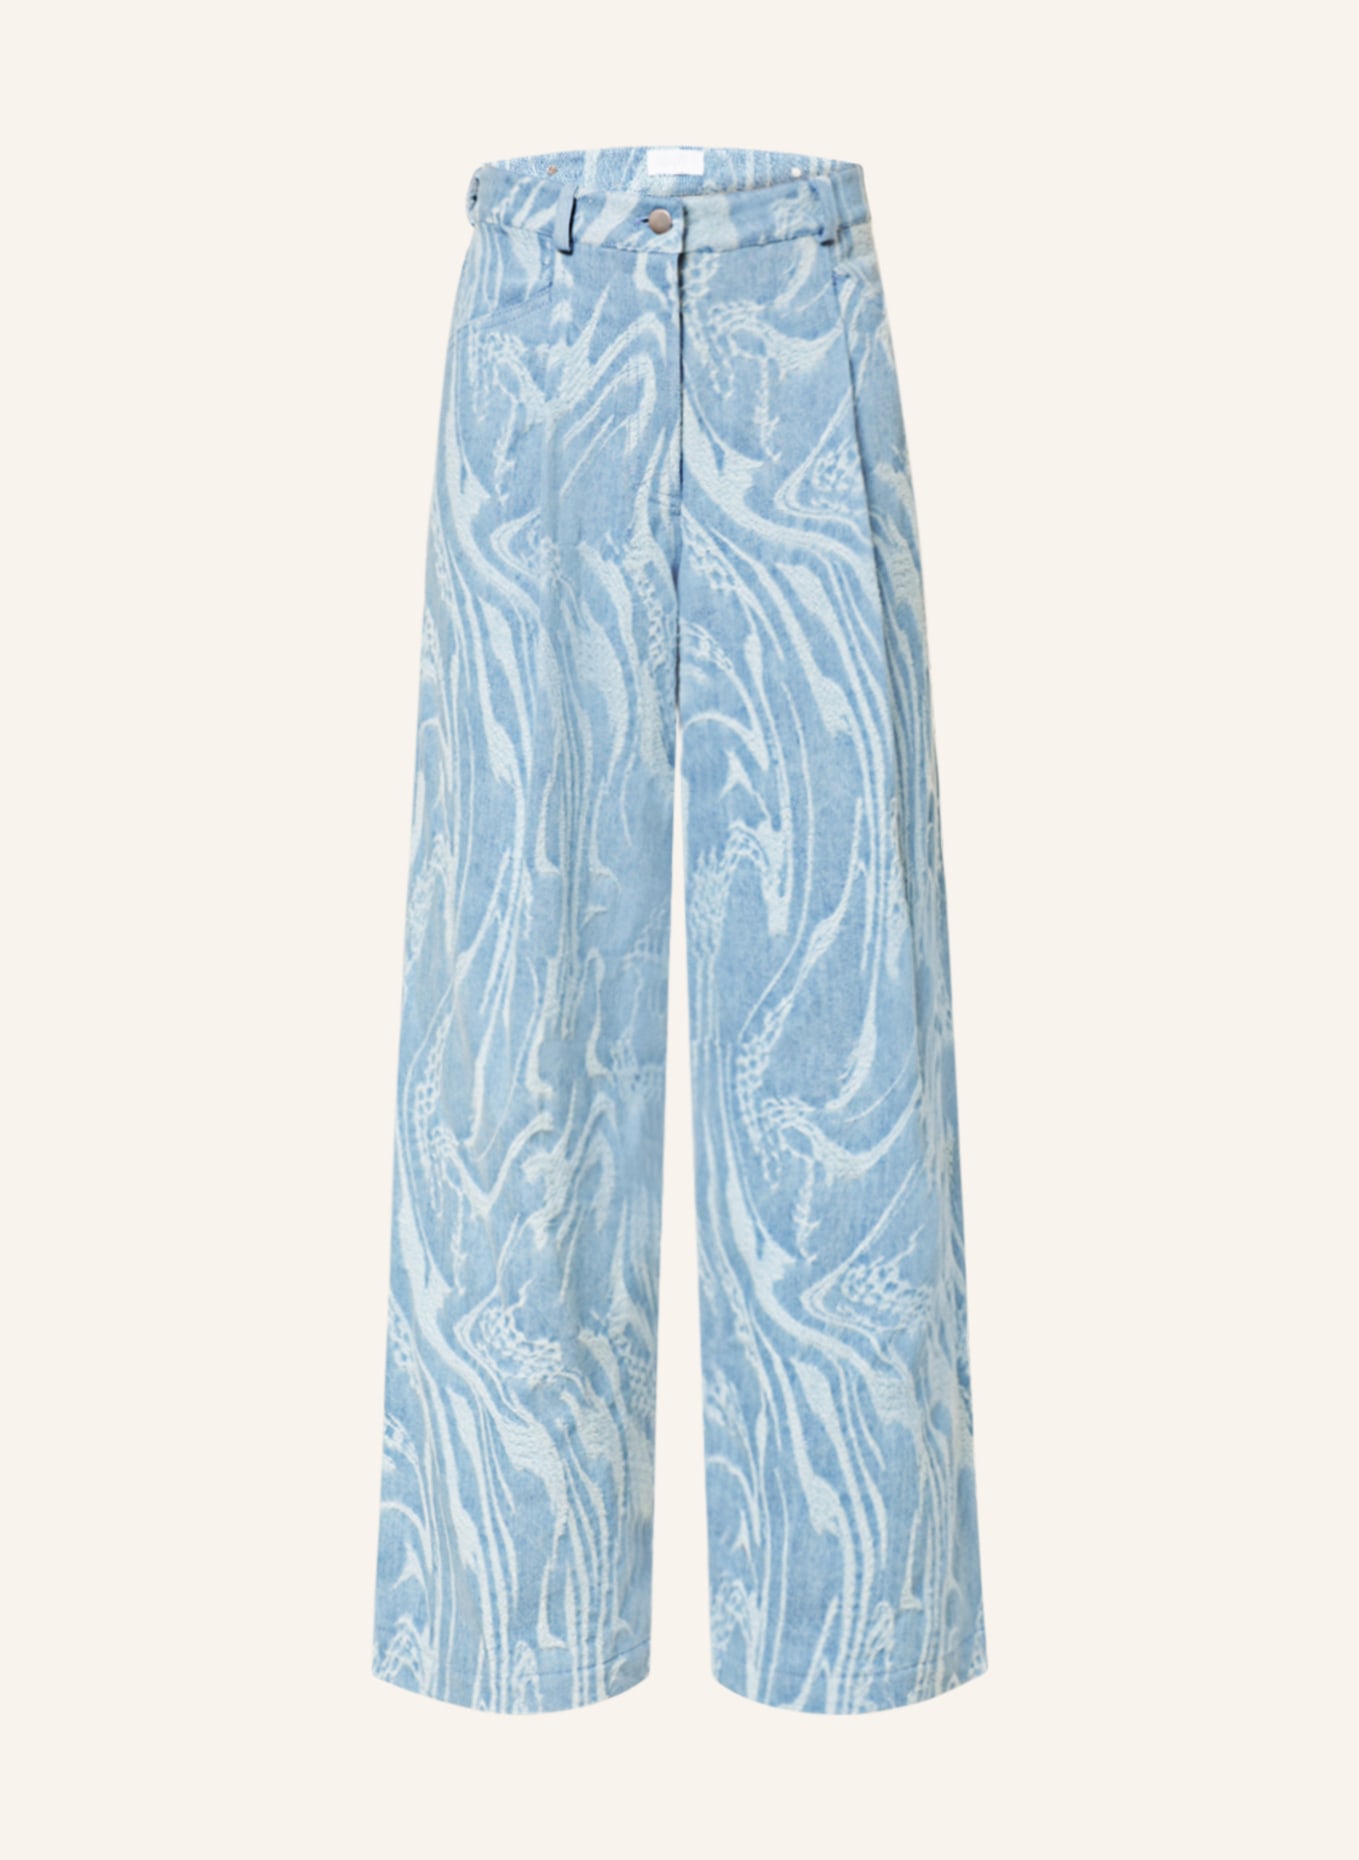 Lala Berlin Flared Jeans, Farbe: 65311 denim wave (Bild 1)